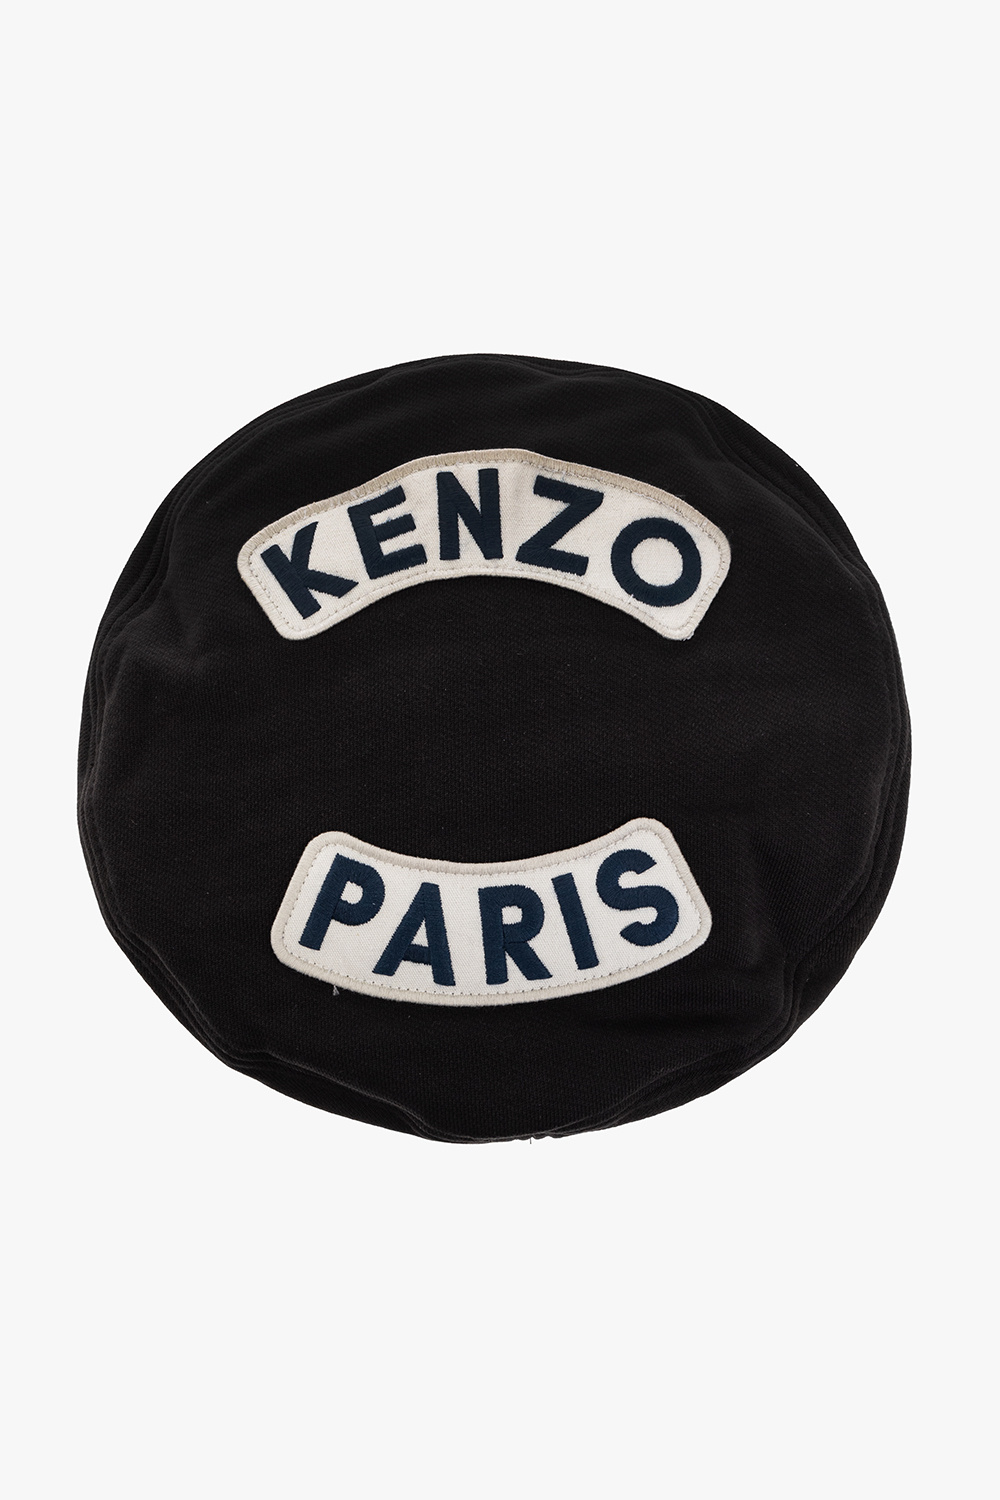 Kenzo embroidered motorsport baseball cap